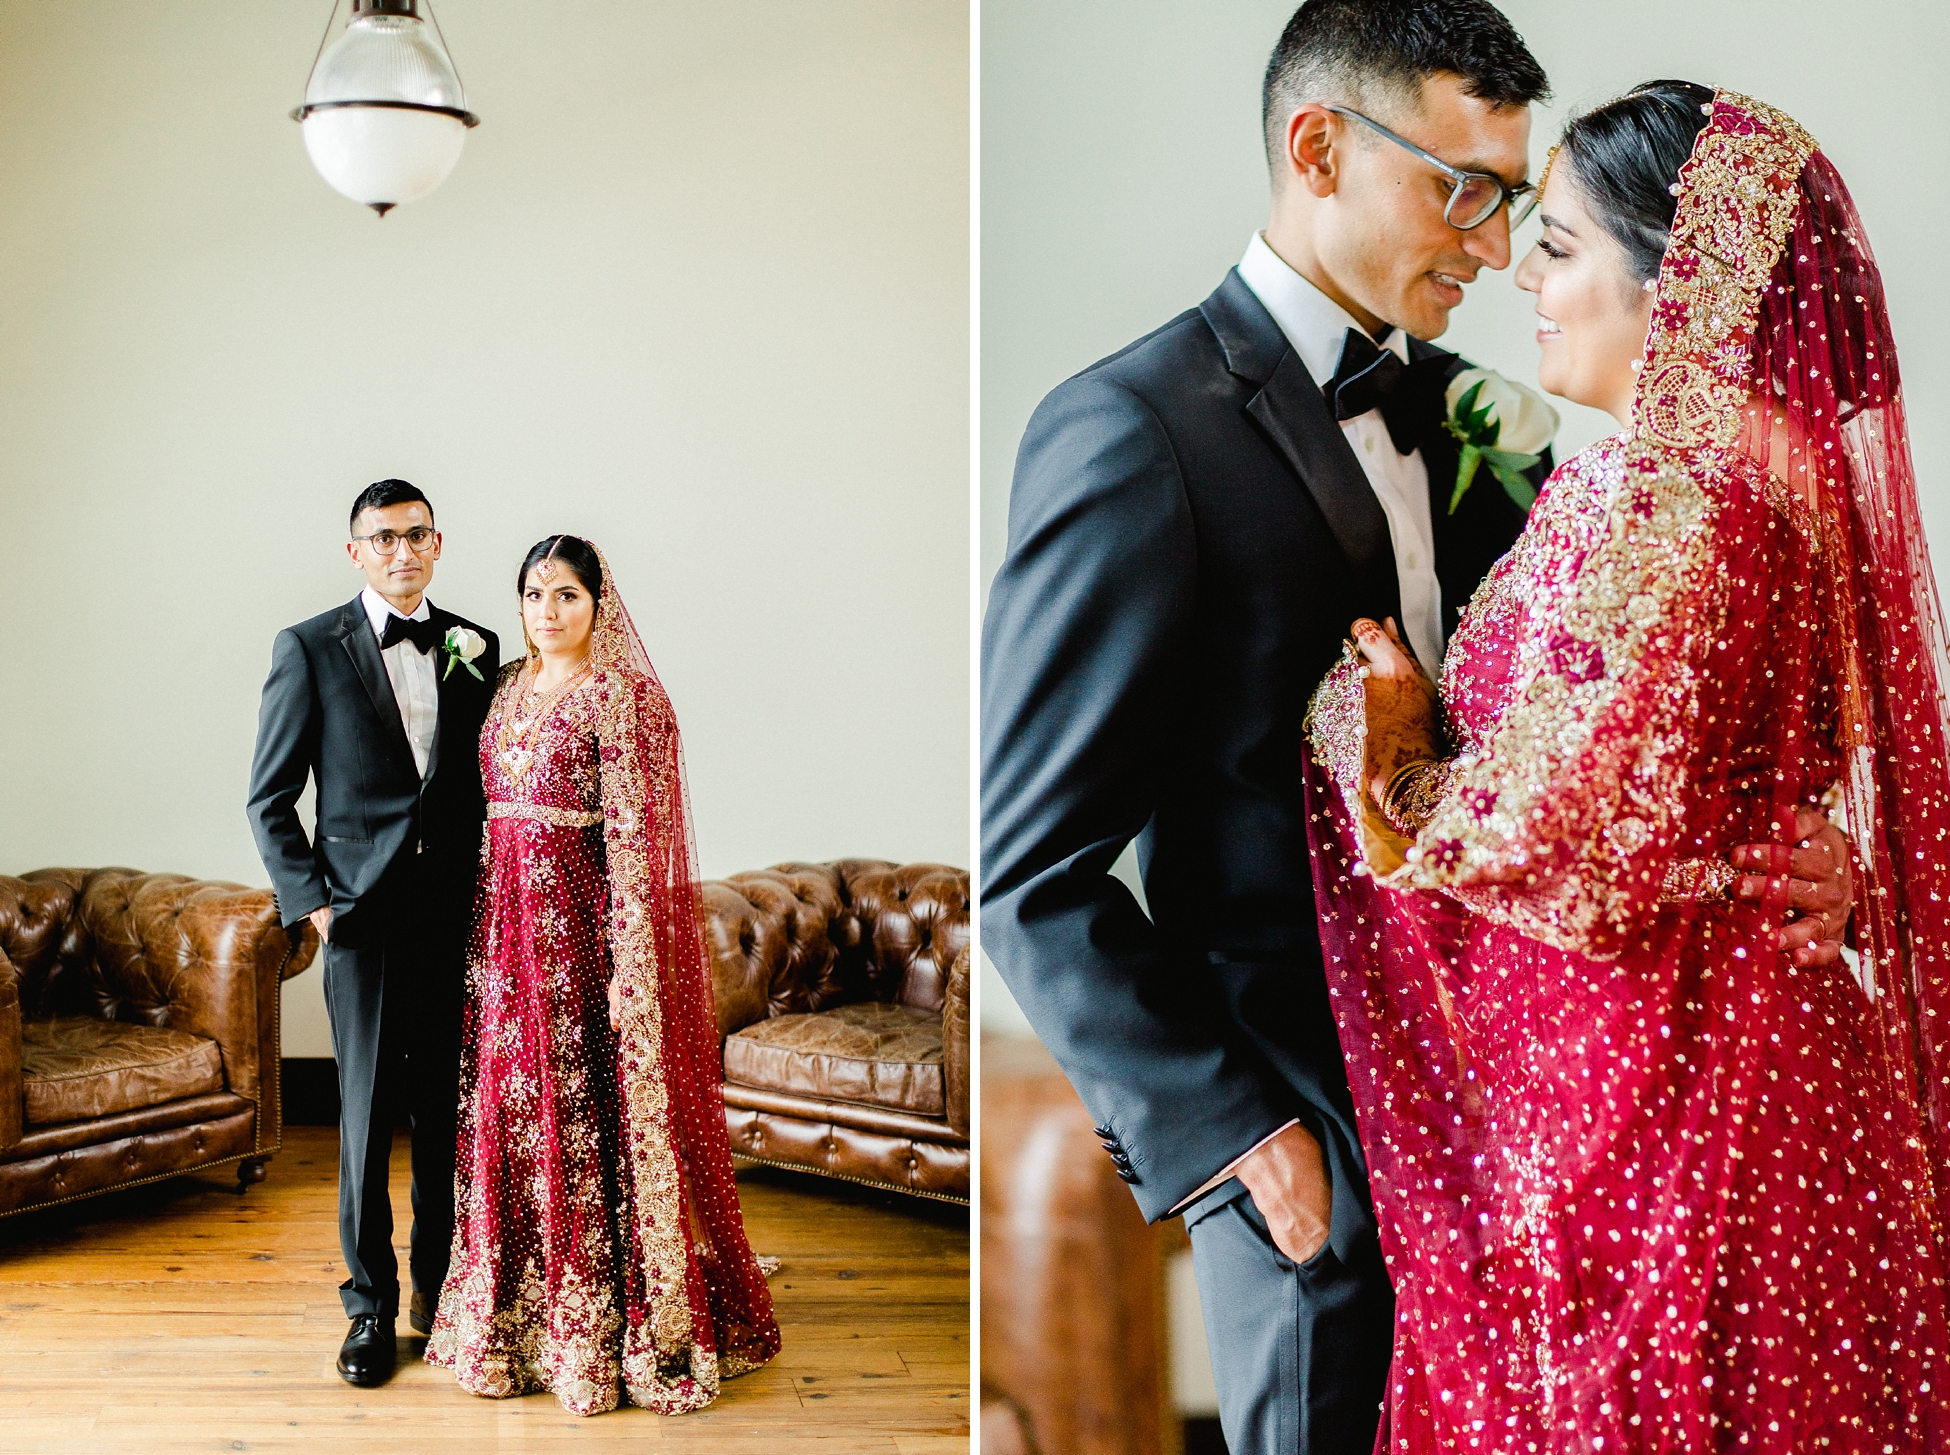 Oxford Exchange Wedding | © Ailyn La Torre Photography 2018